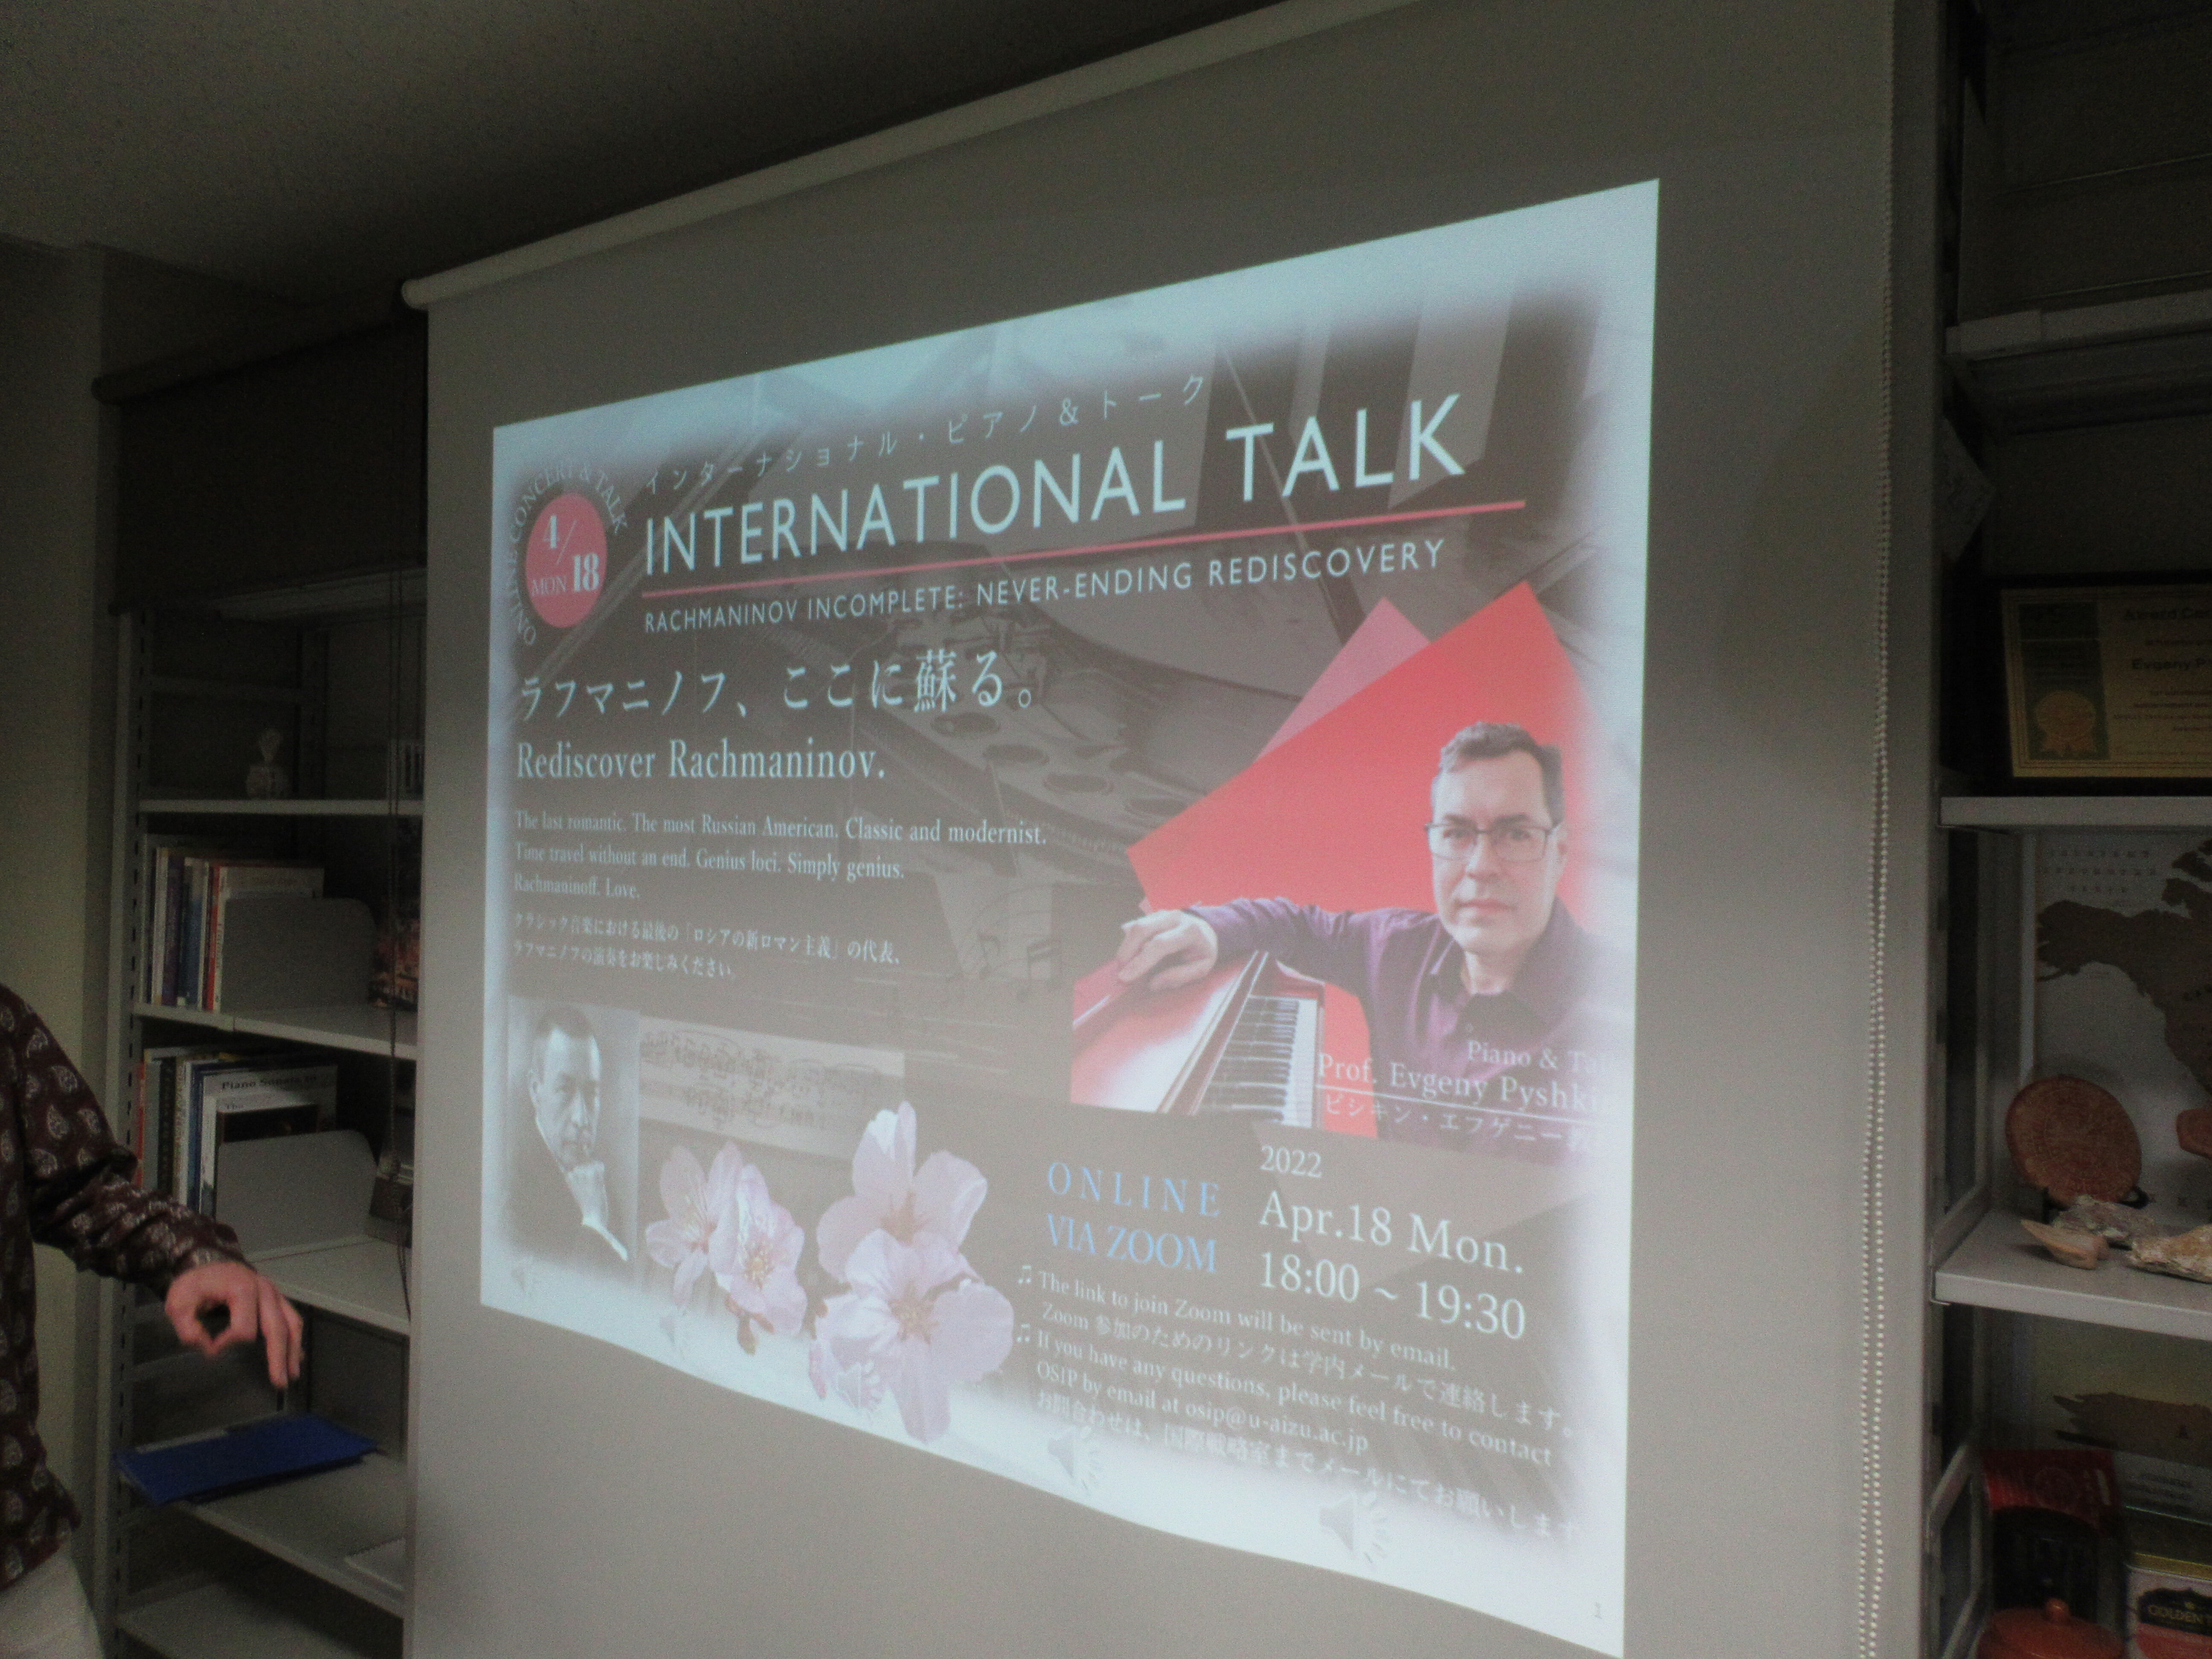 International (PIANO) TalkRACHMANINOV INCOMPLETE by Professor Pyshkin was held!